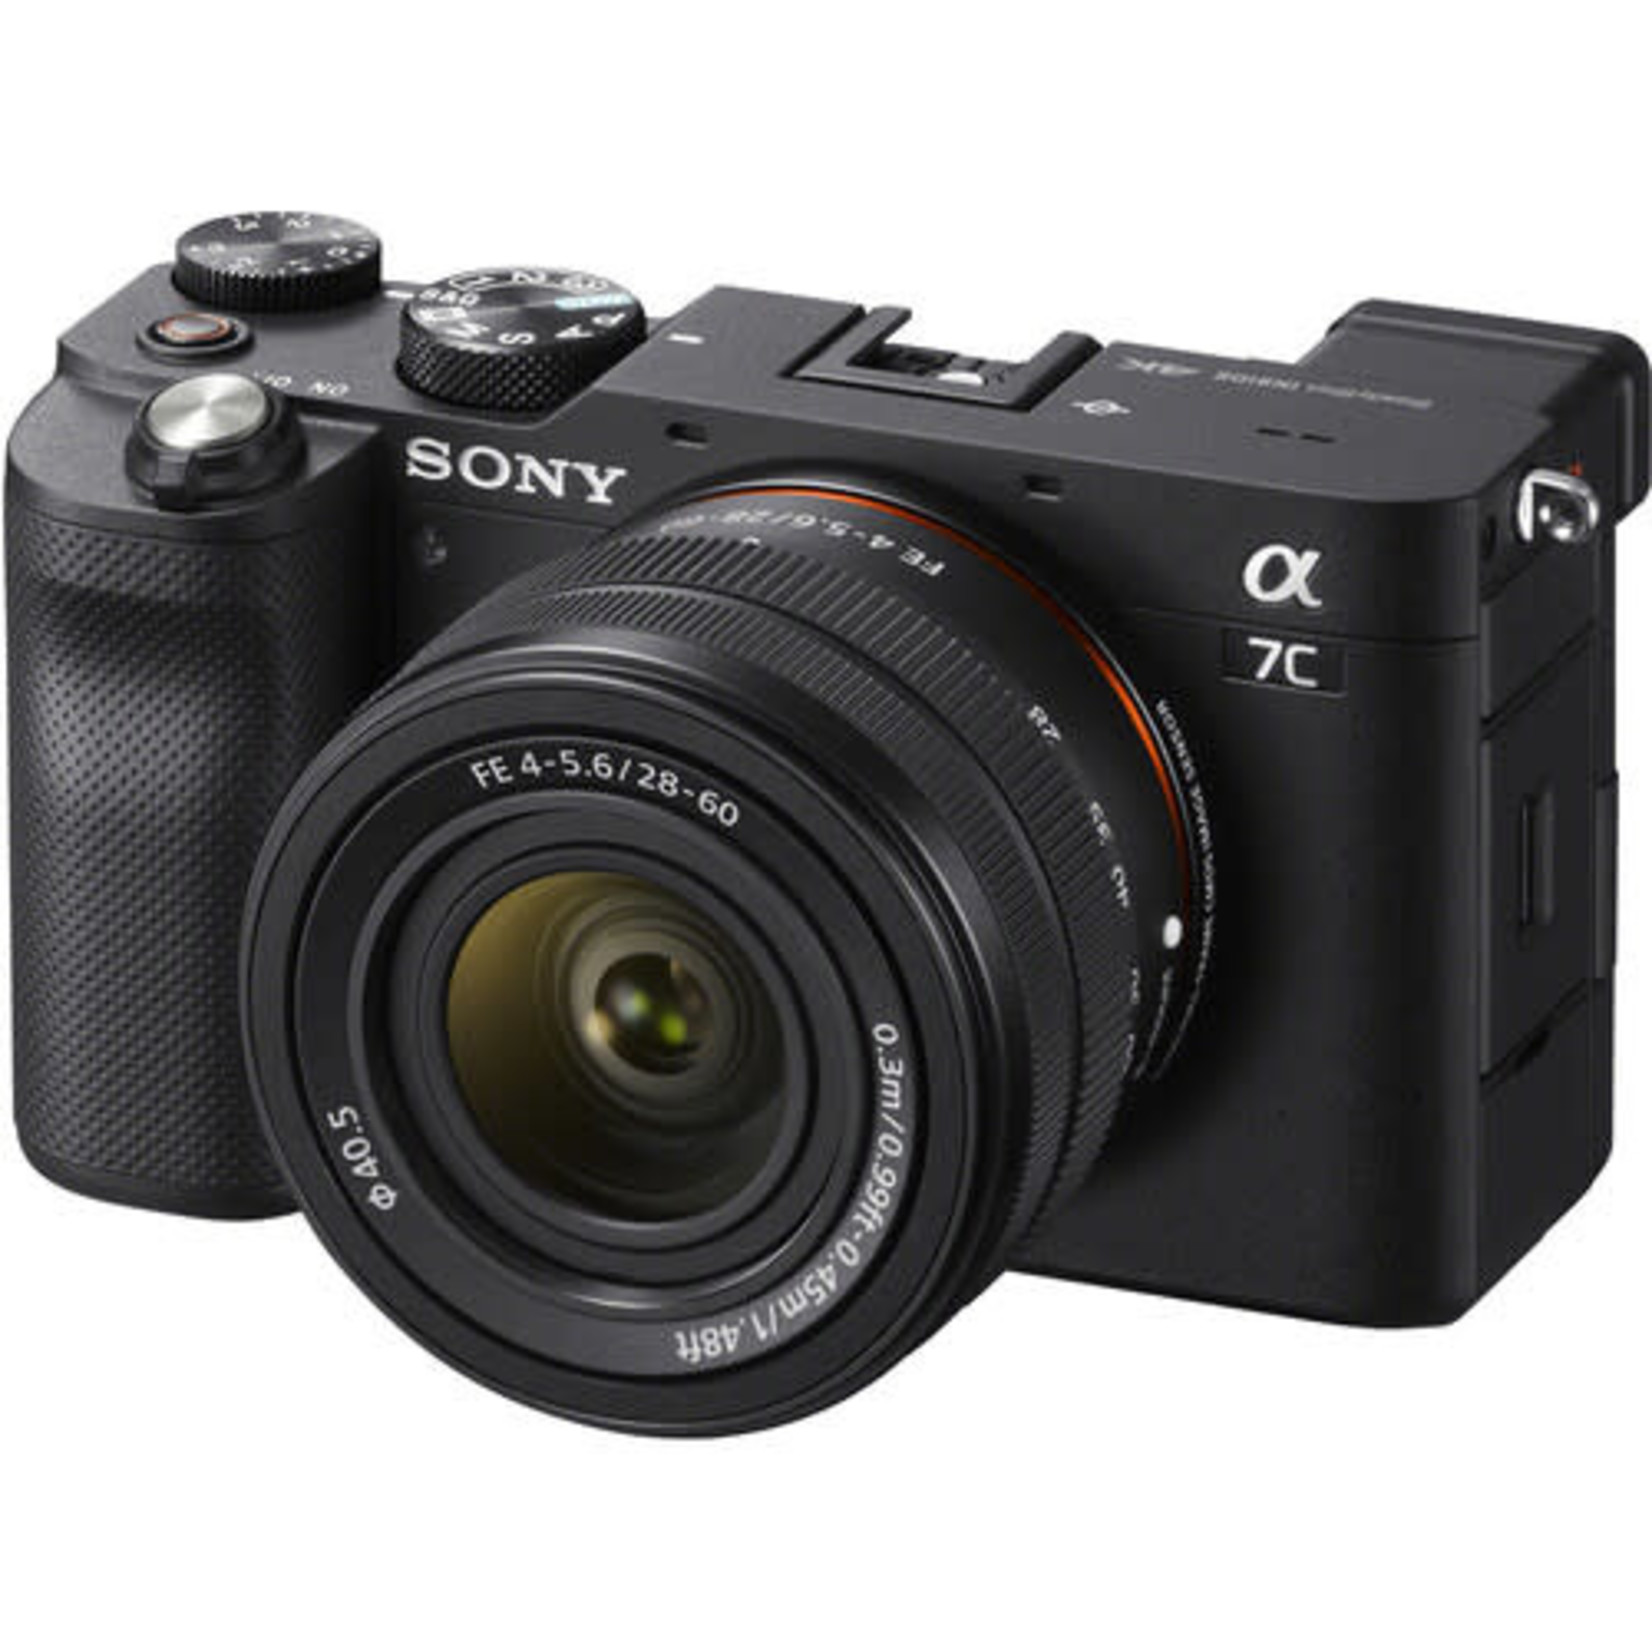 Sony Sony Alpha a7C Mirrorless Digital Camera with 28-60mm Lens (Black)